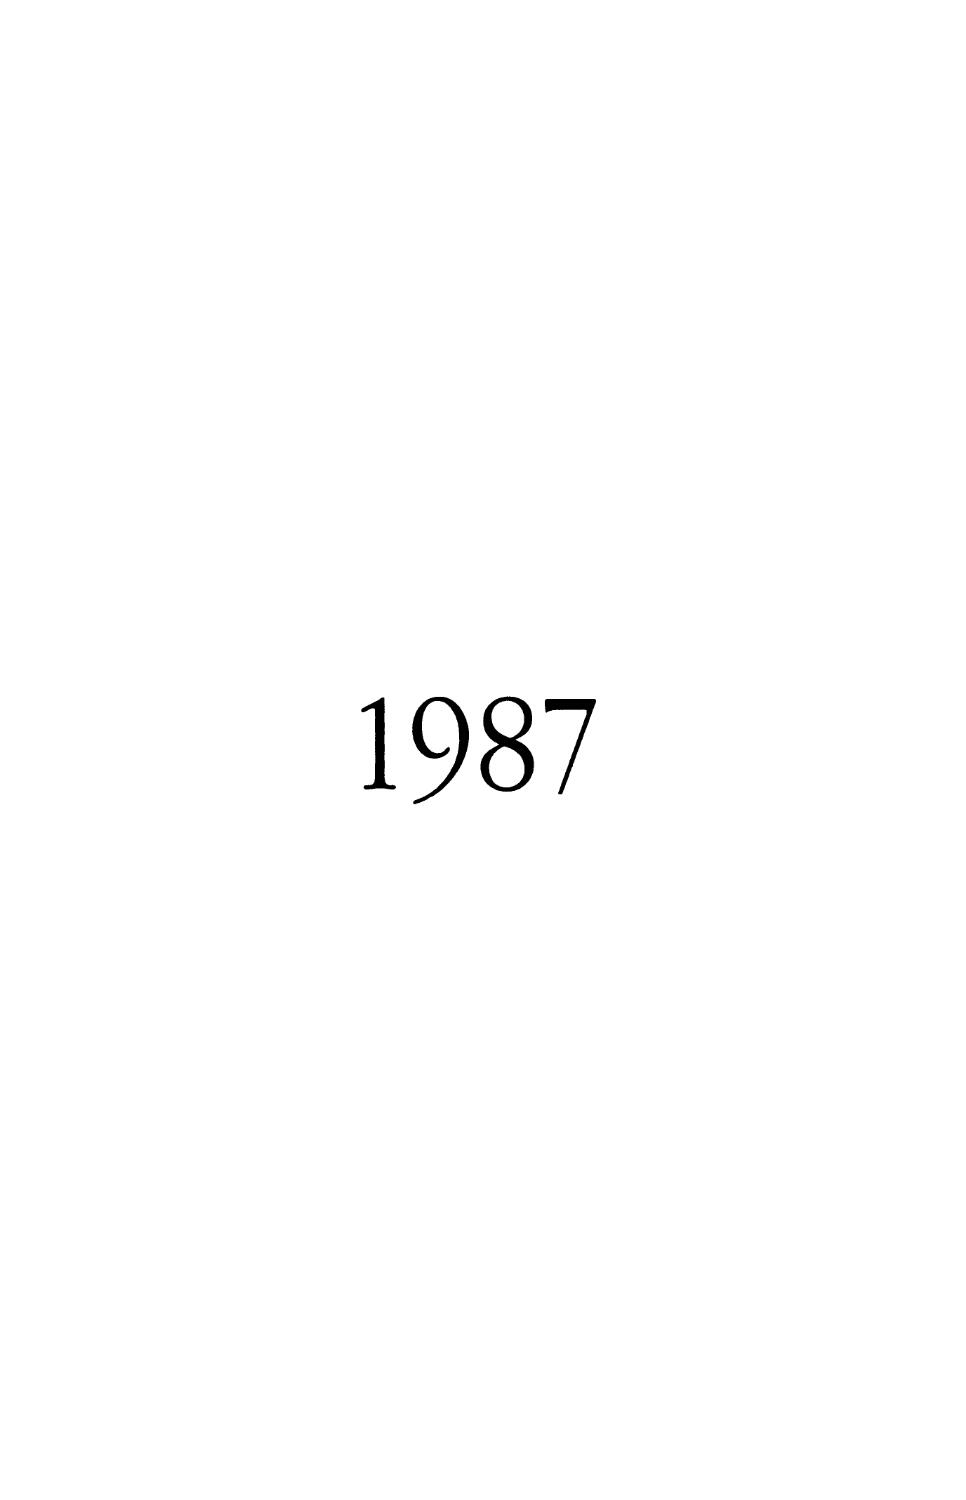 СТИХОТВОРЕНИЯ 1987-1996
1987